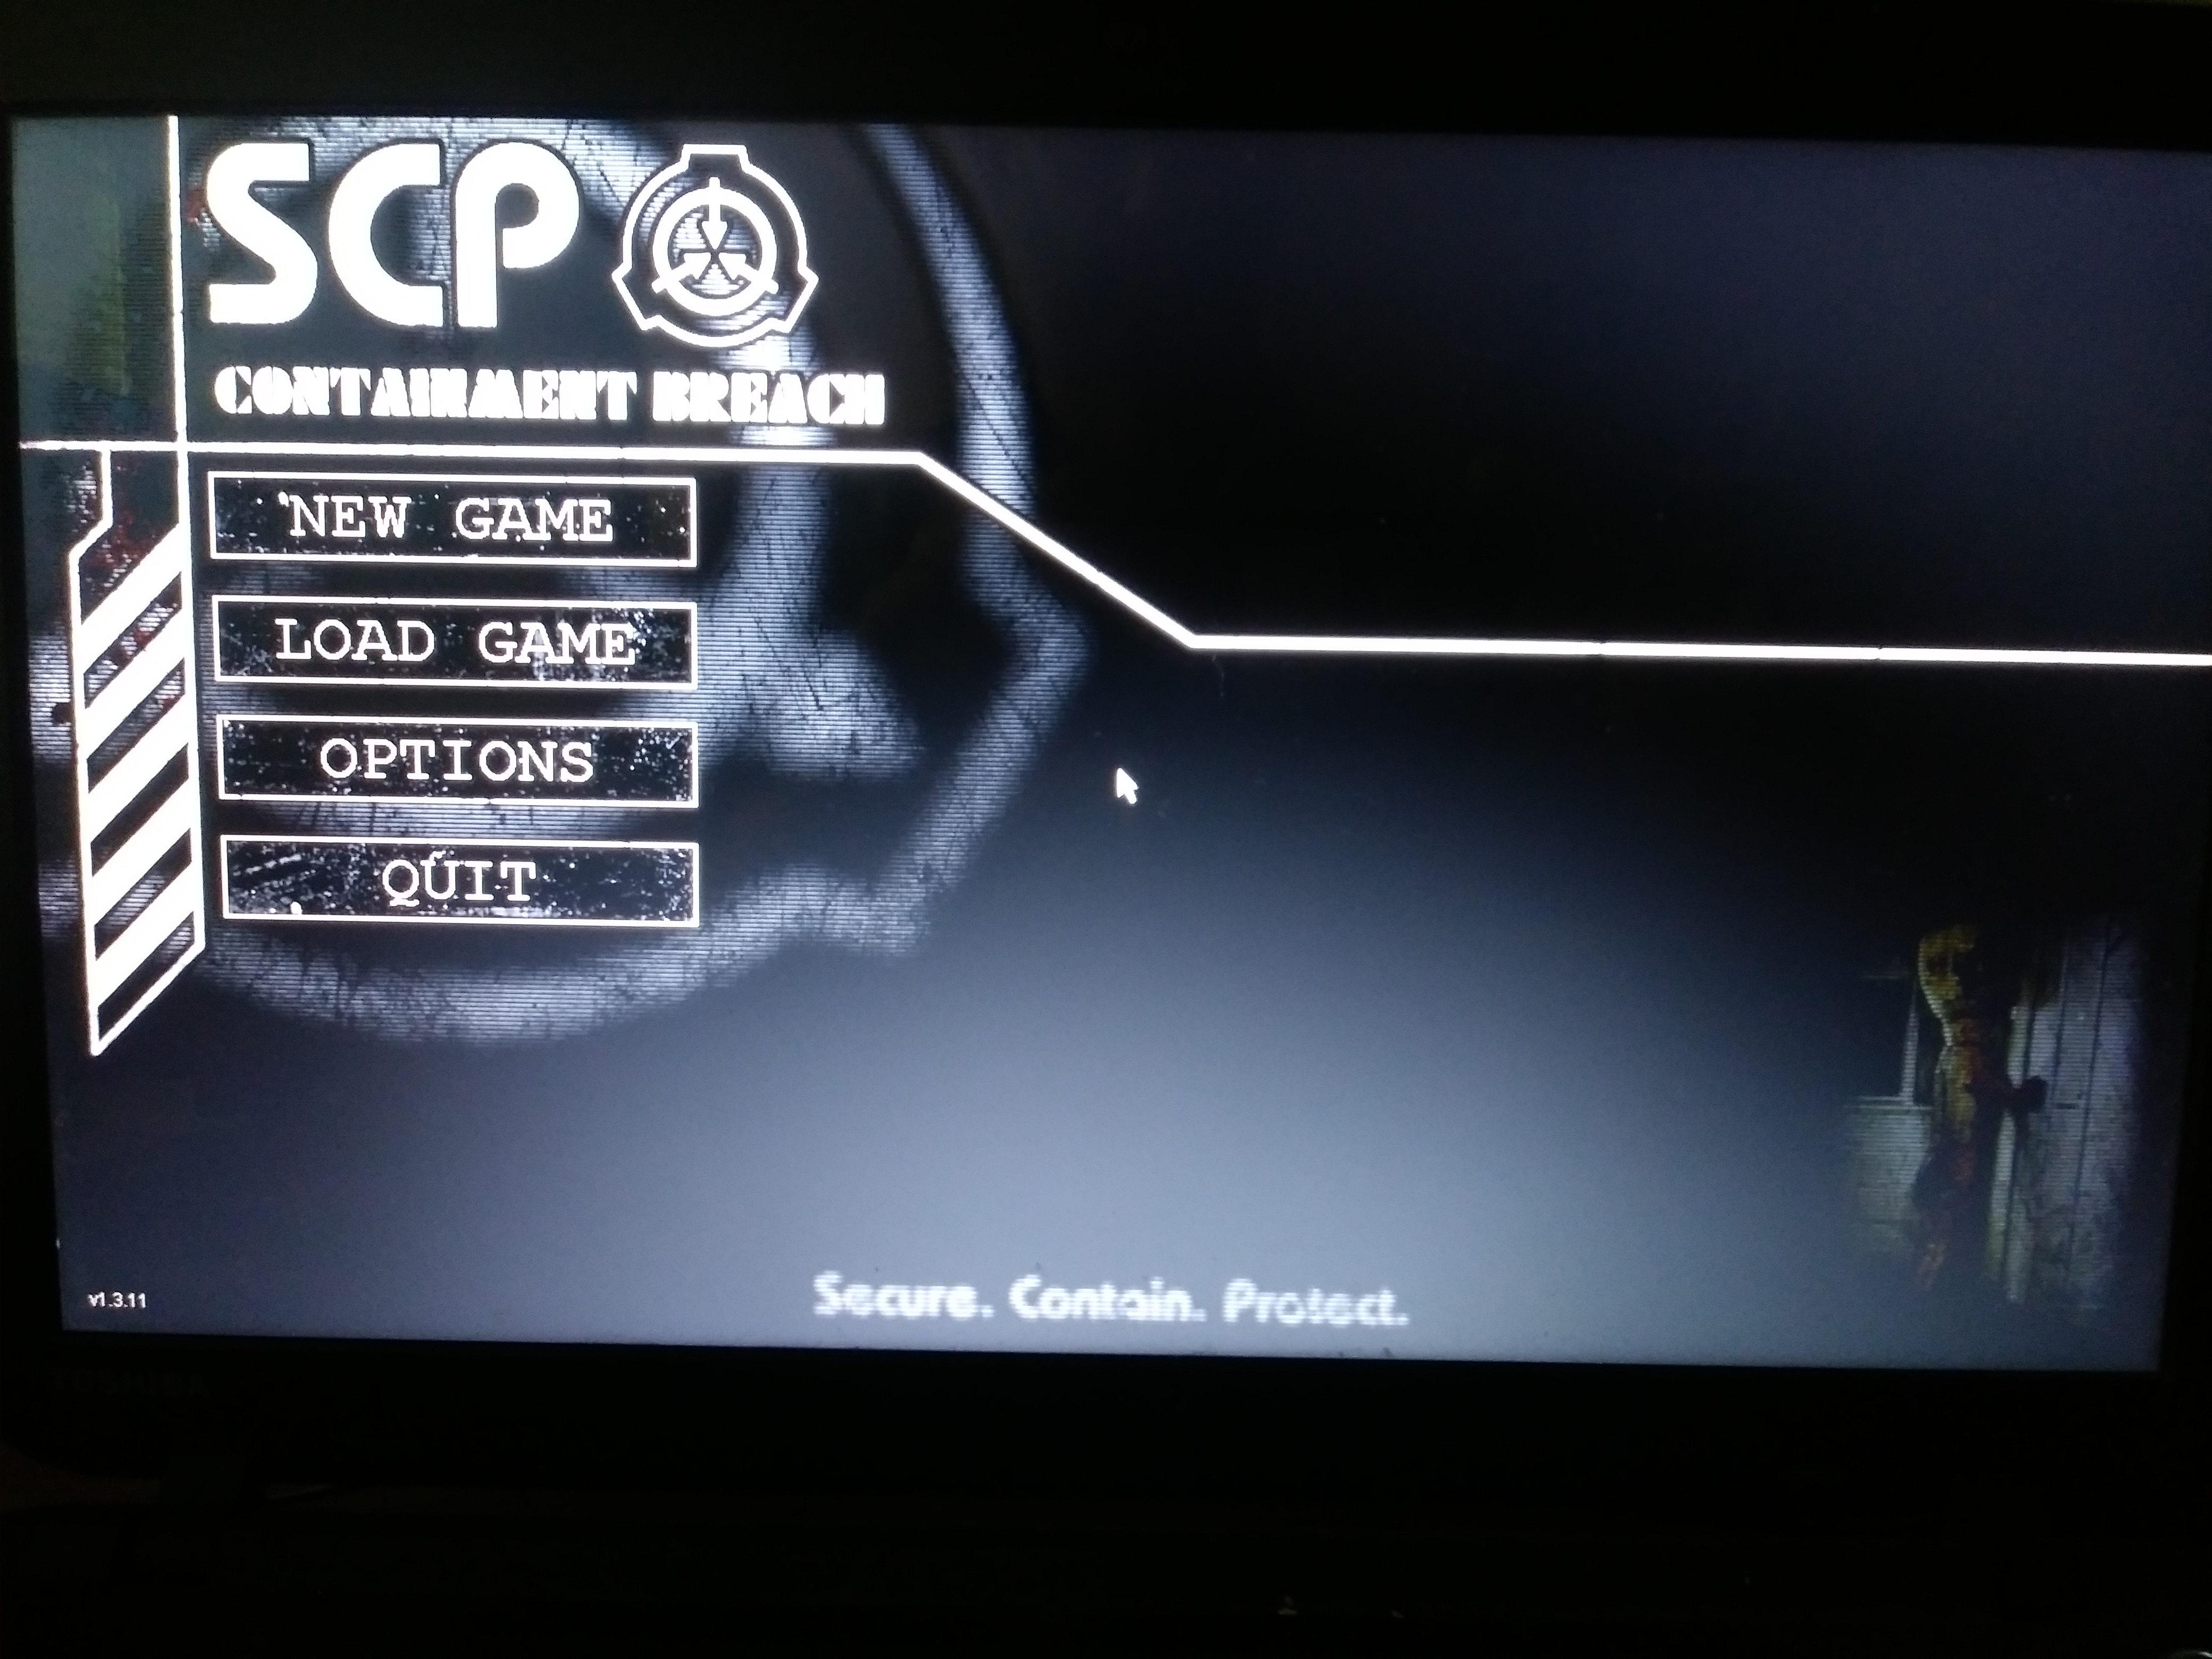 scp containment breach keypad code